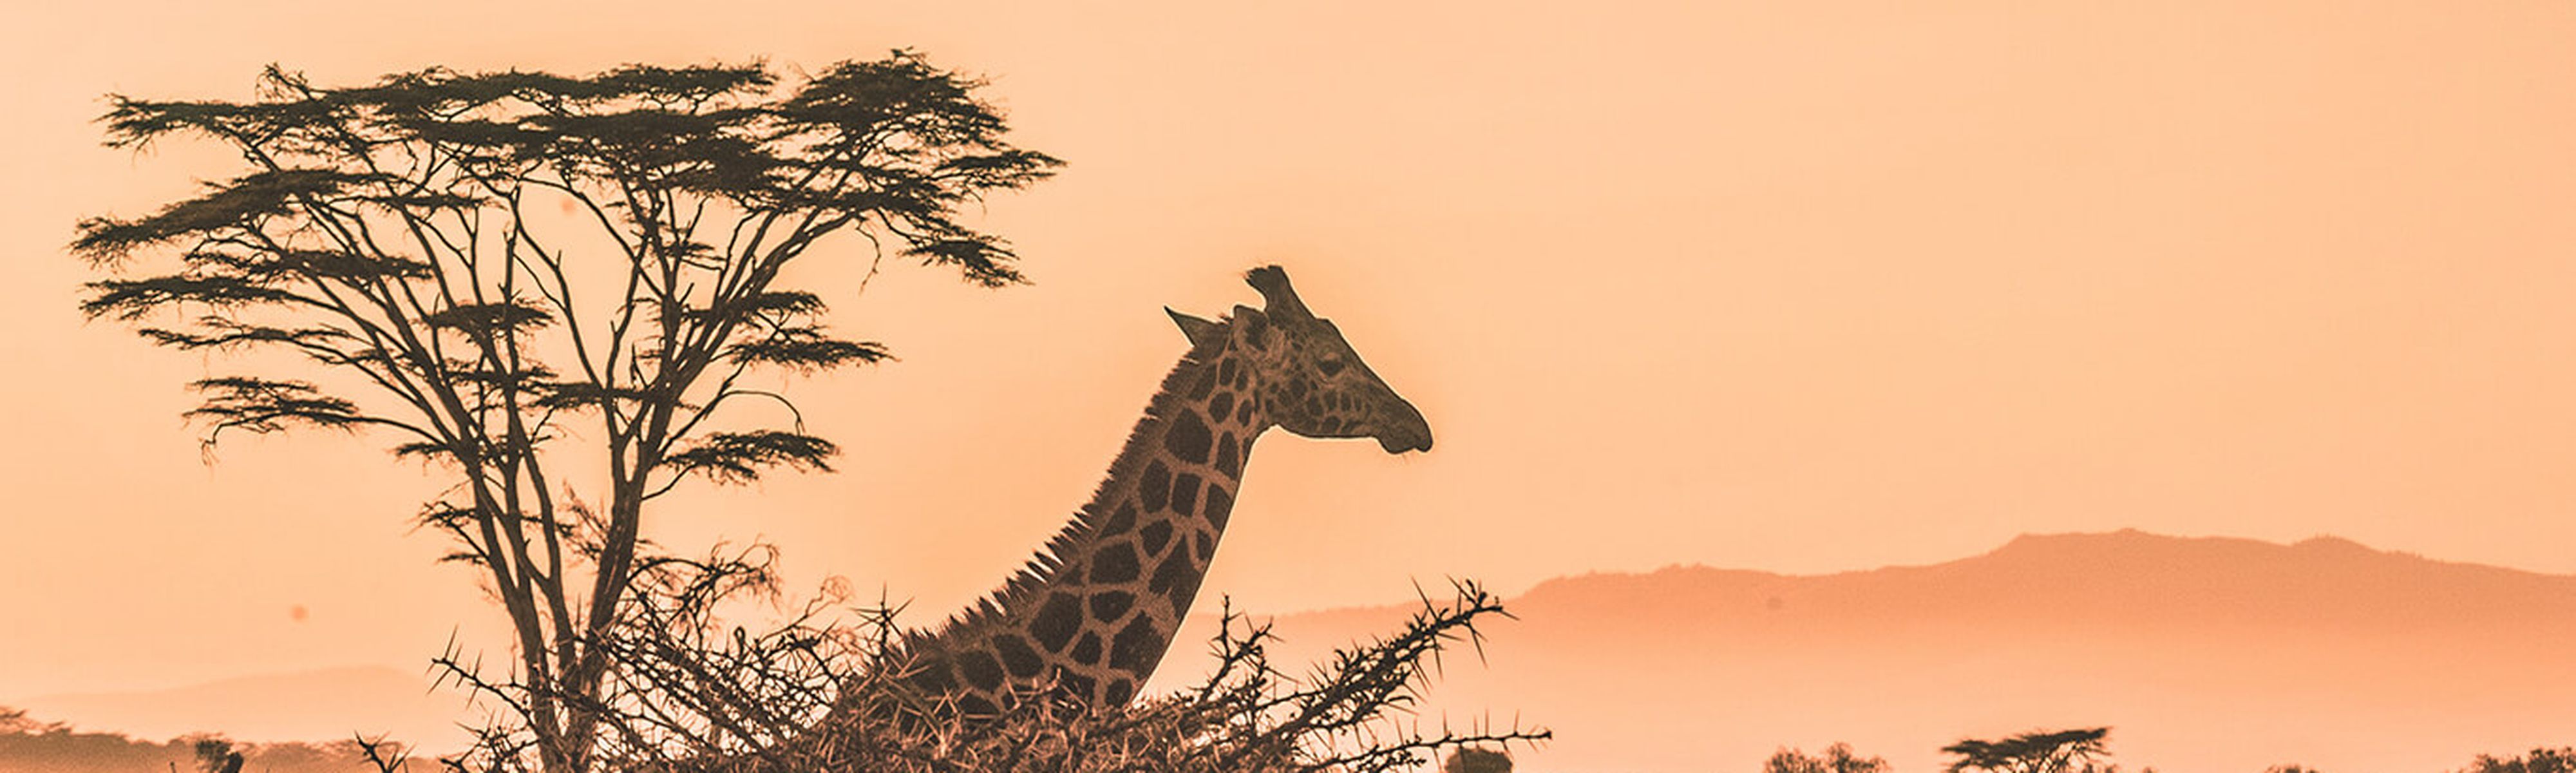 giraffe looking over savanna trees in kenya at sunrise